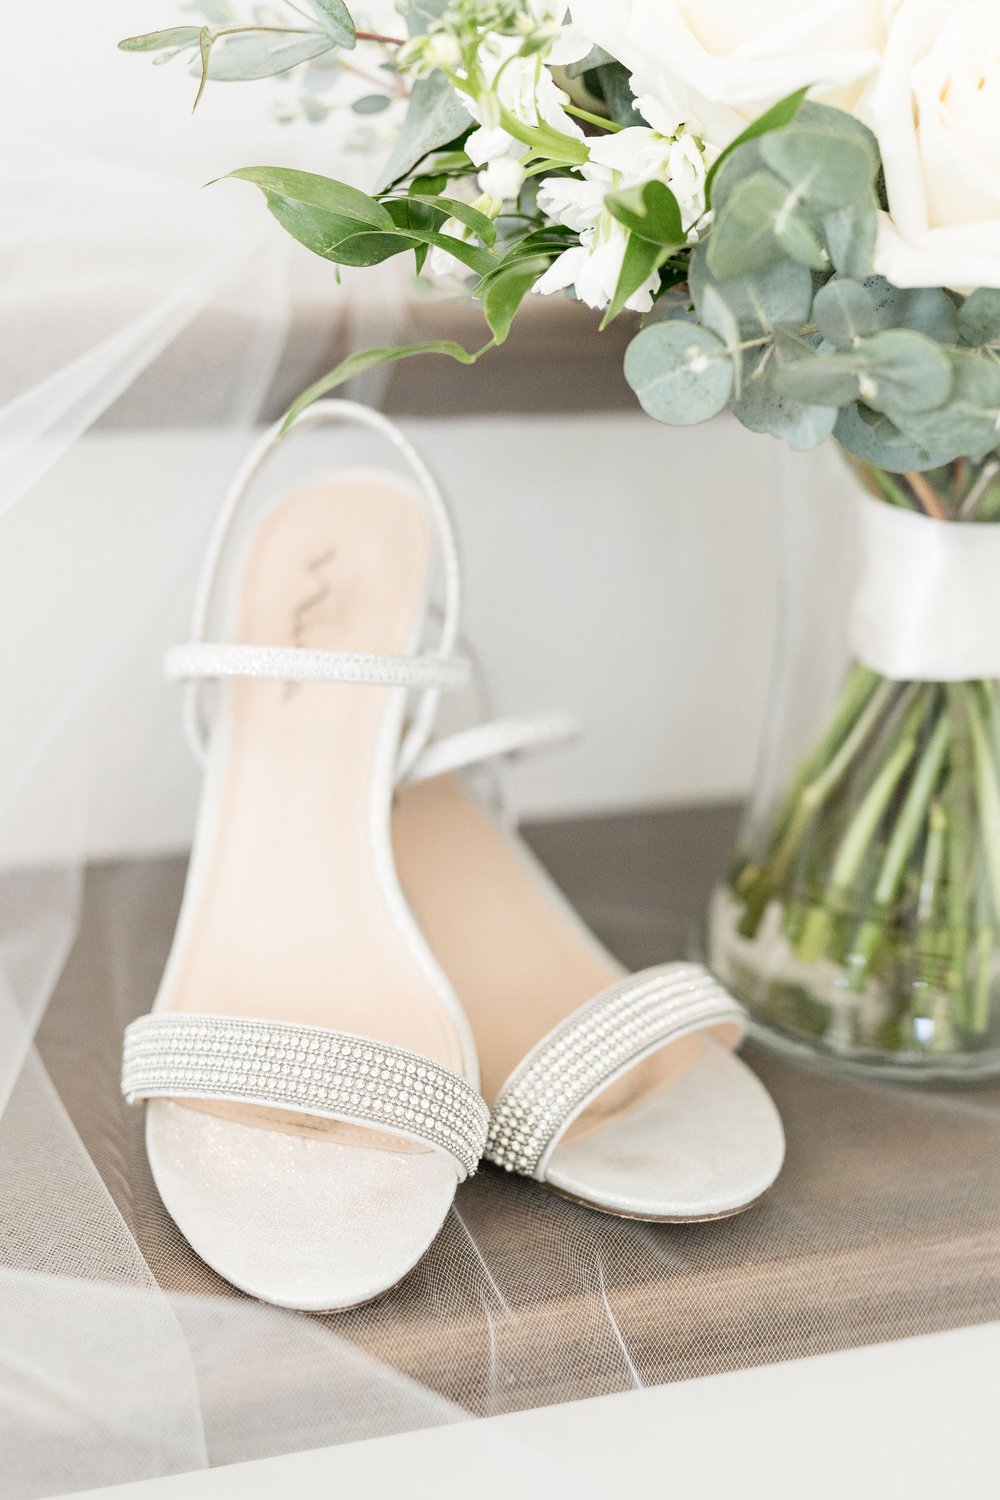 Wedding shoes.jpg